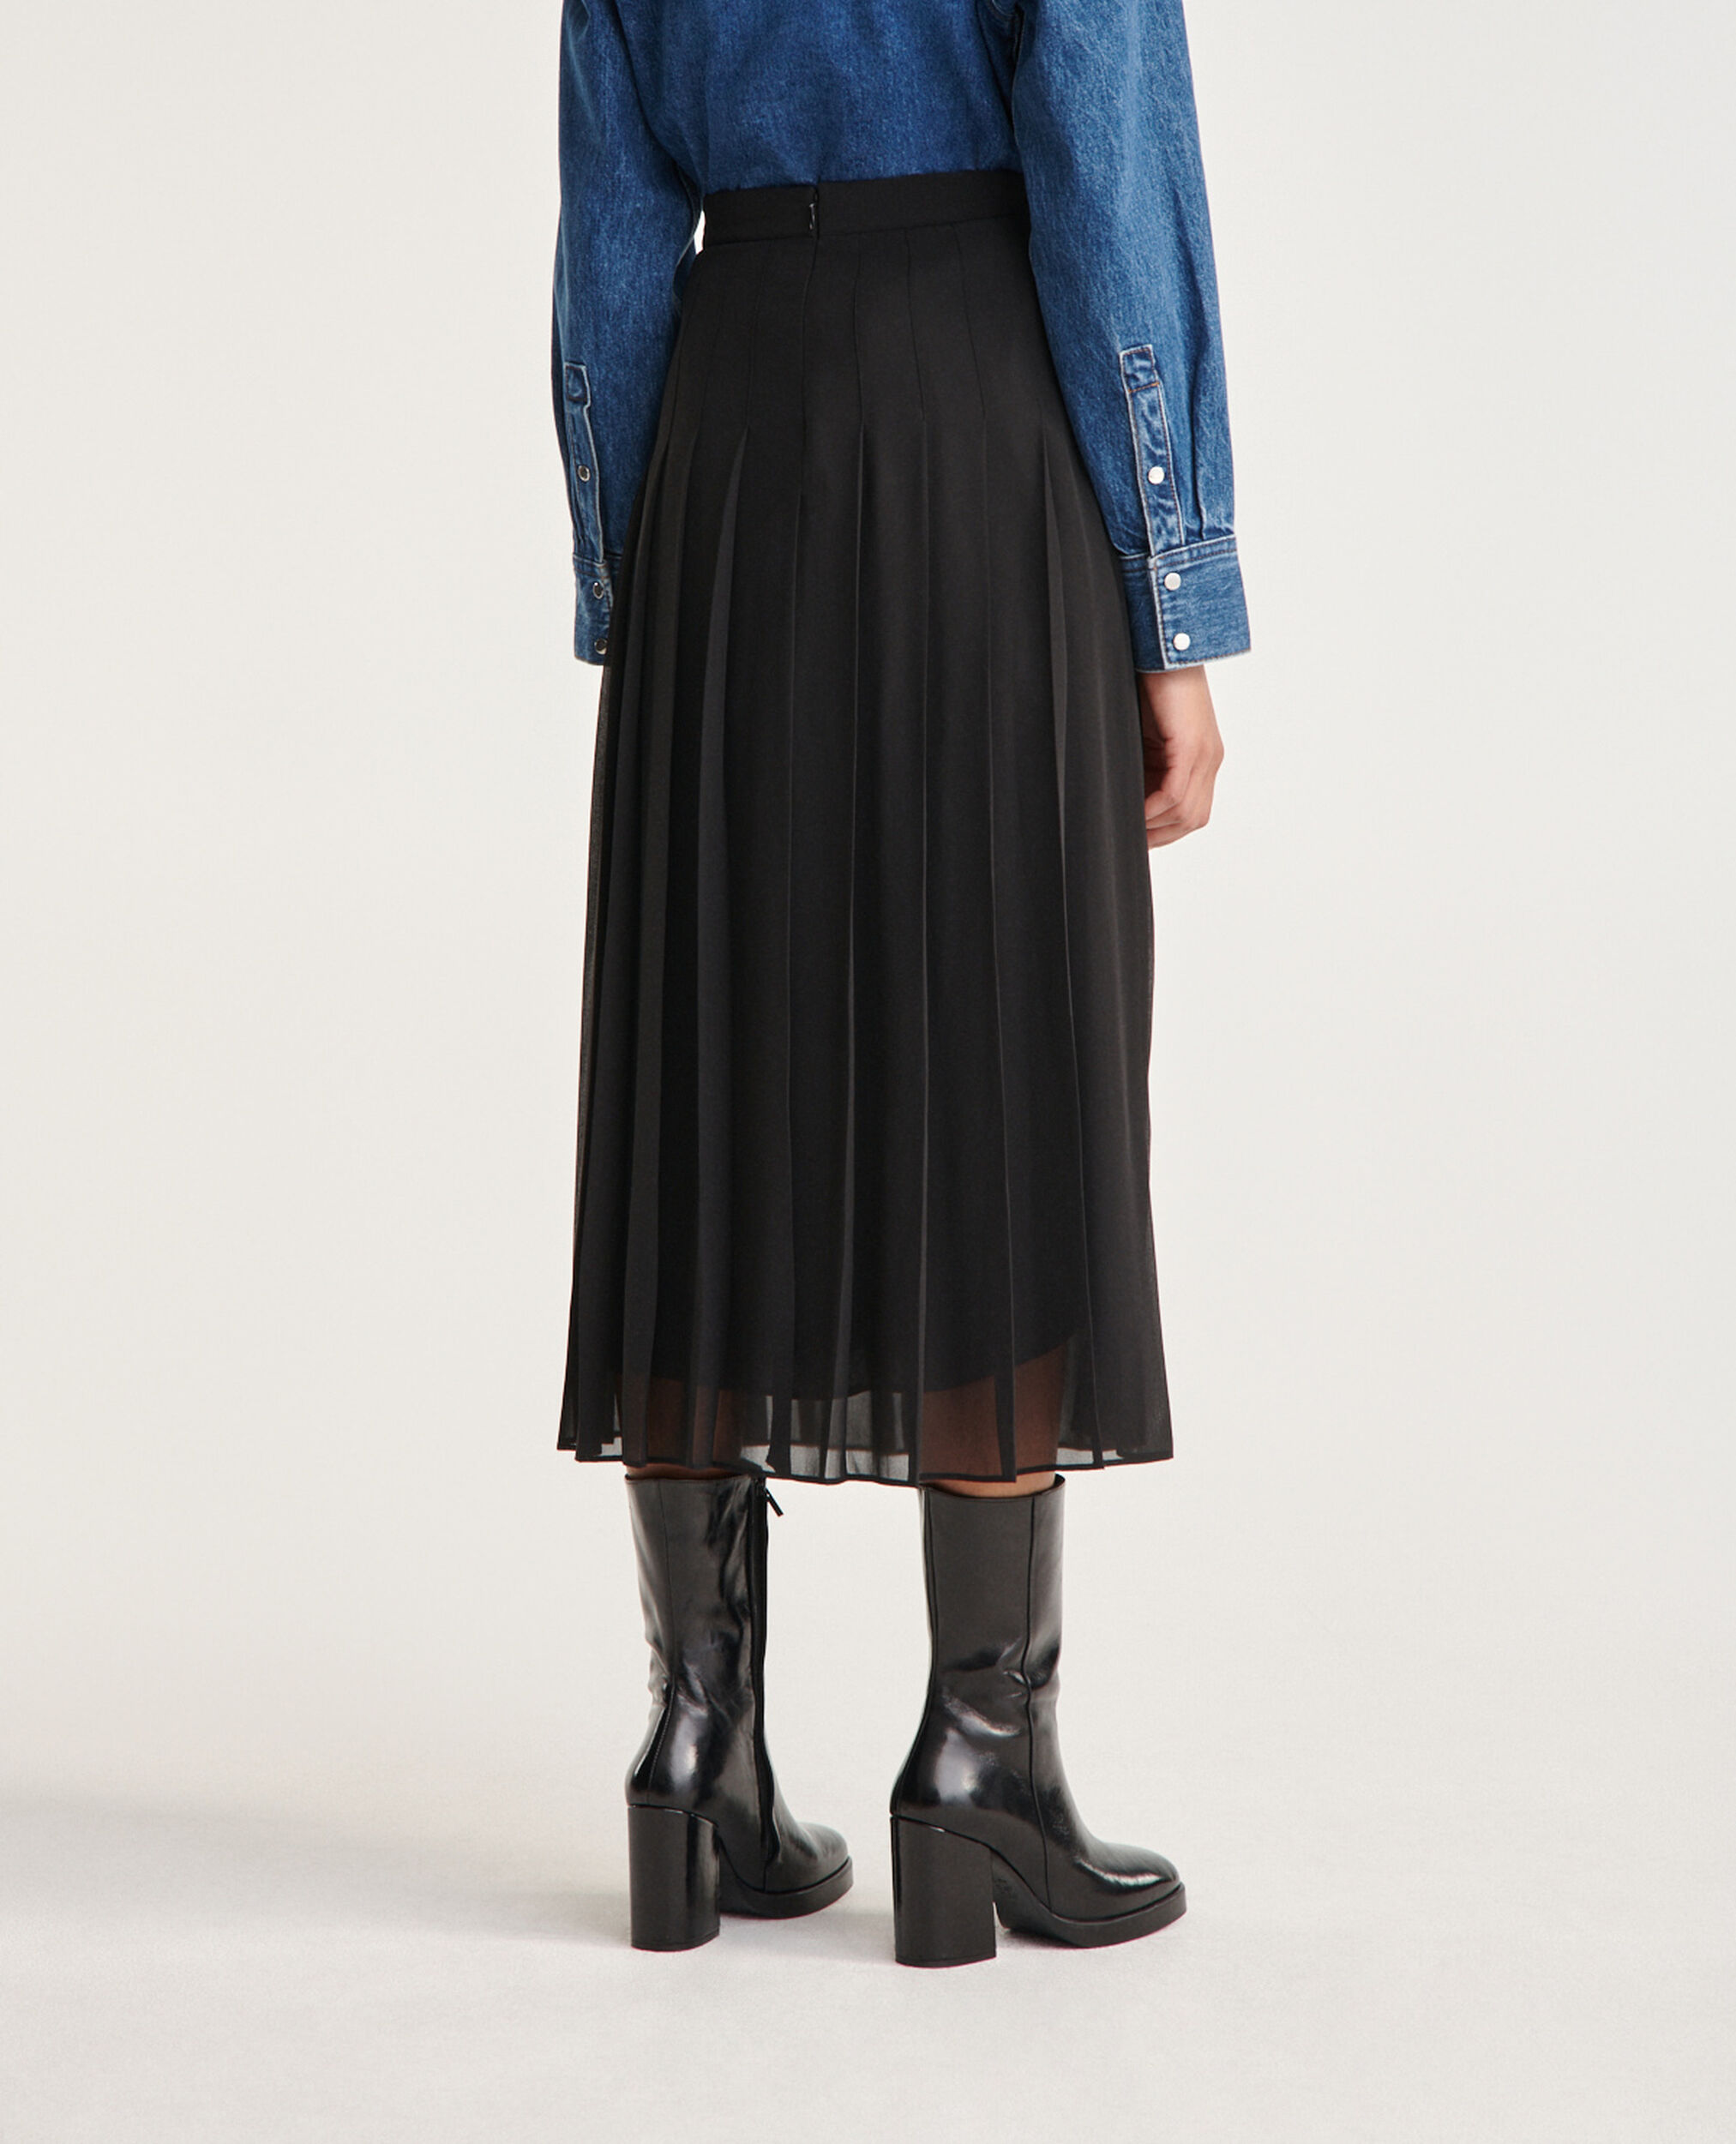 Flowing long pleated skirt in black, BLACK, hi-res image number null